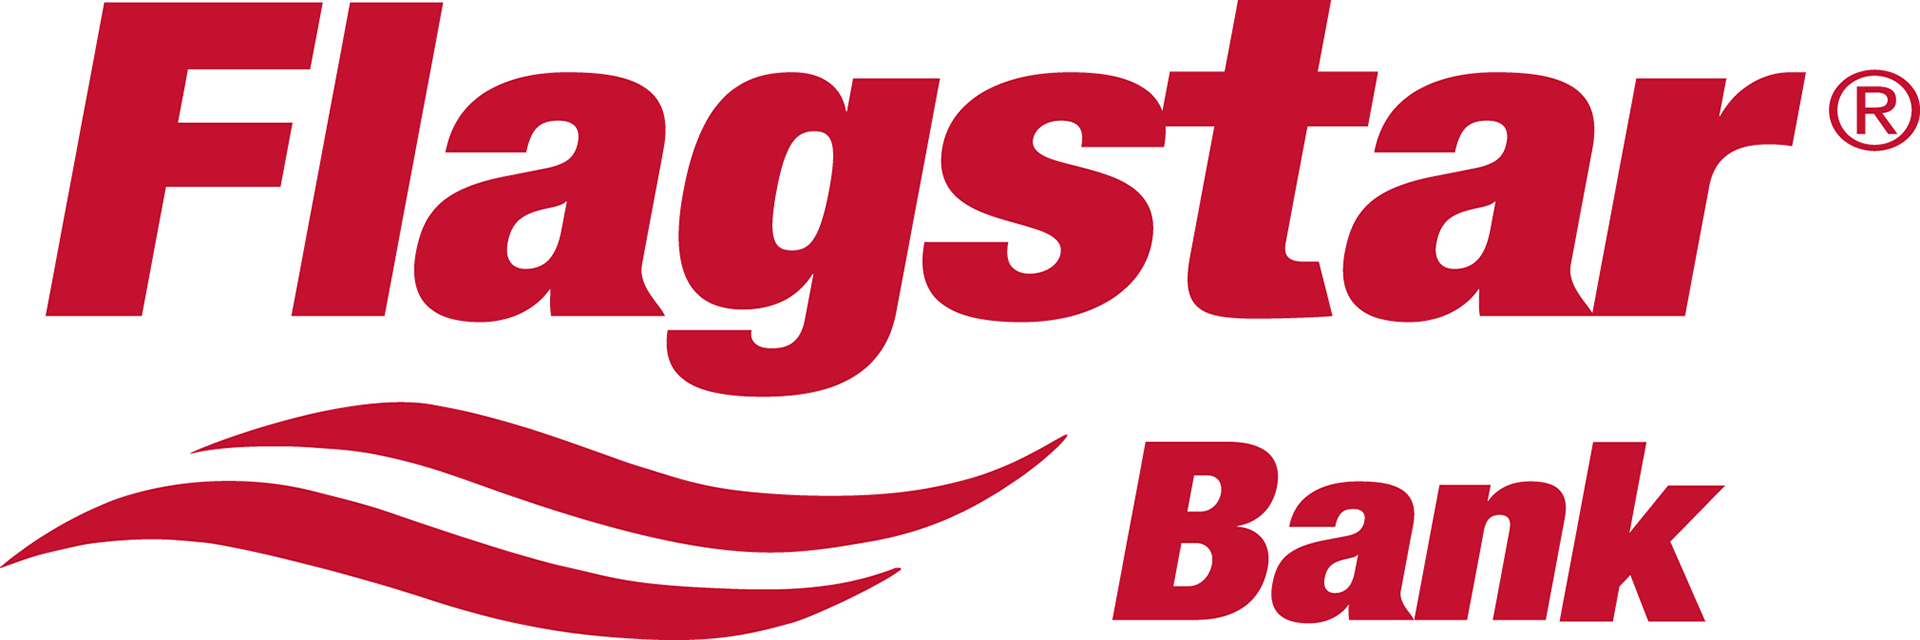 Flagstar Bank, N.A. Company Logo